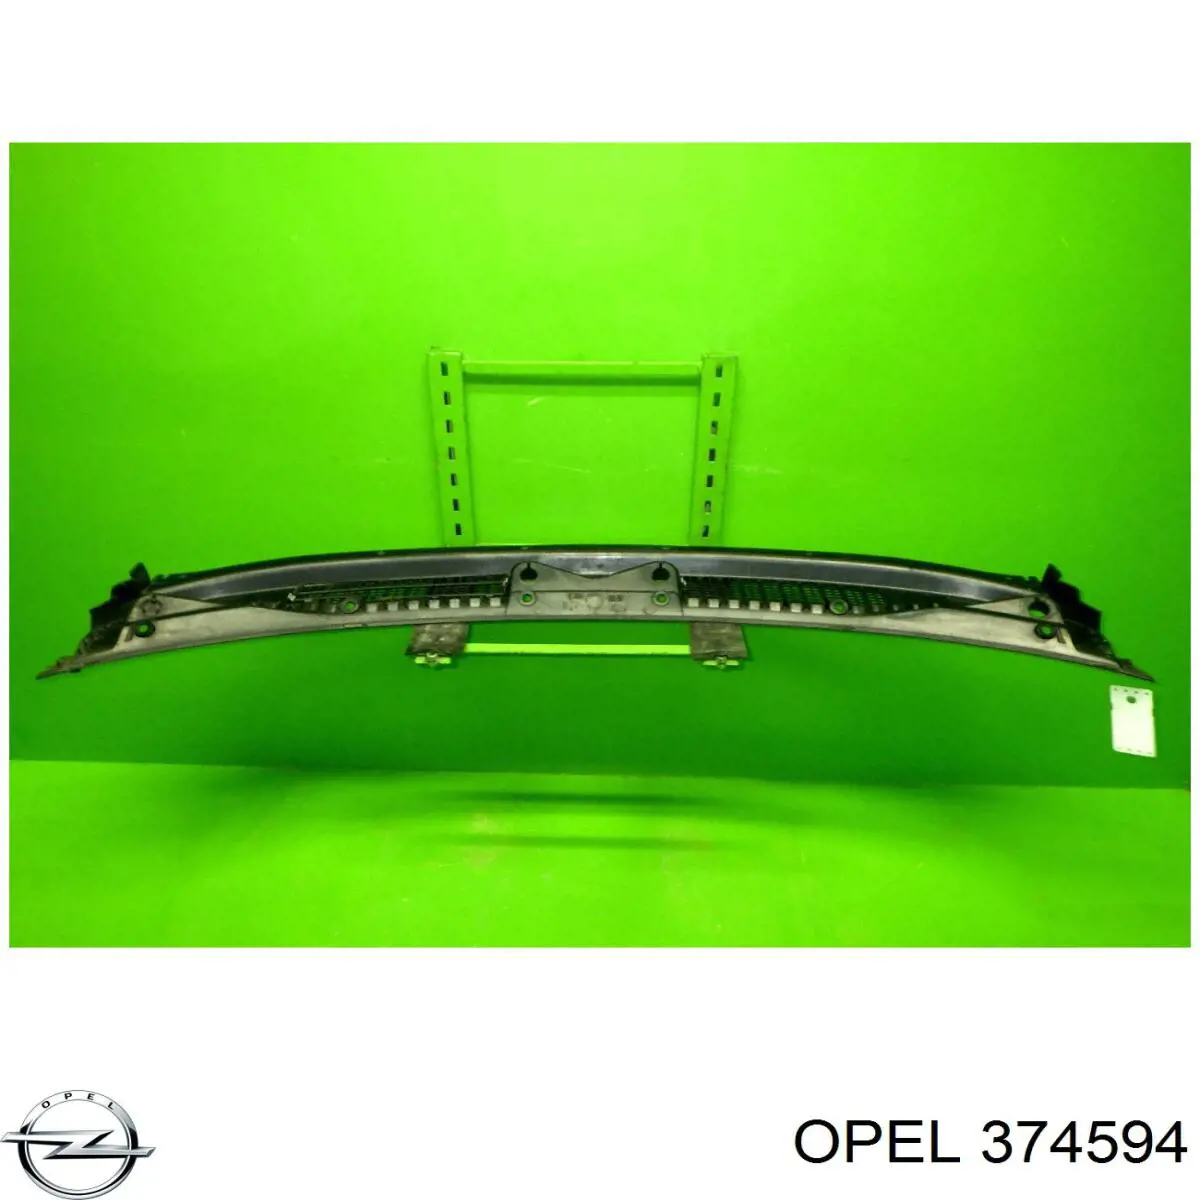 374594 Opel anillo retén de semieje, eje delantero, izquierdo